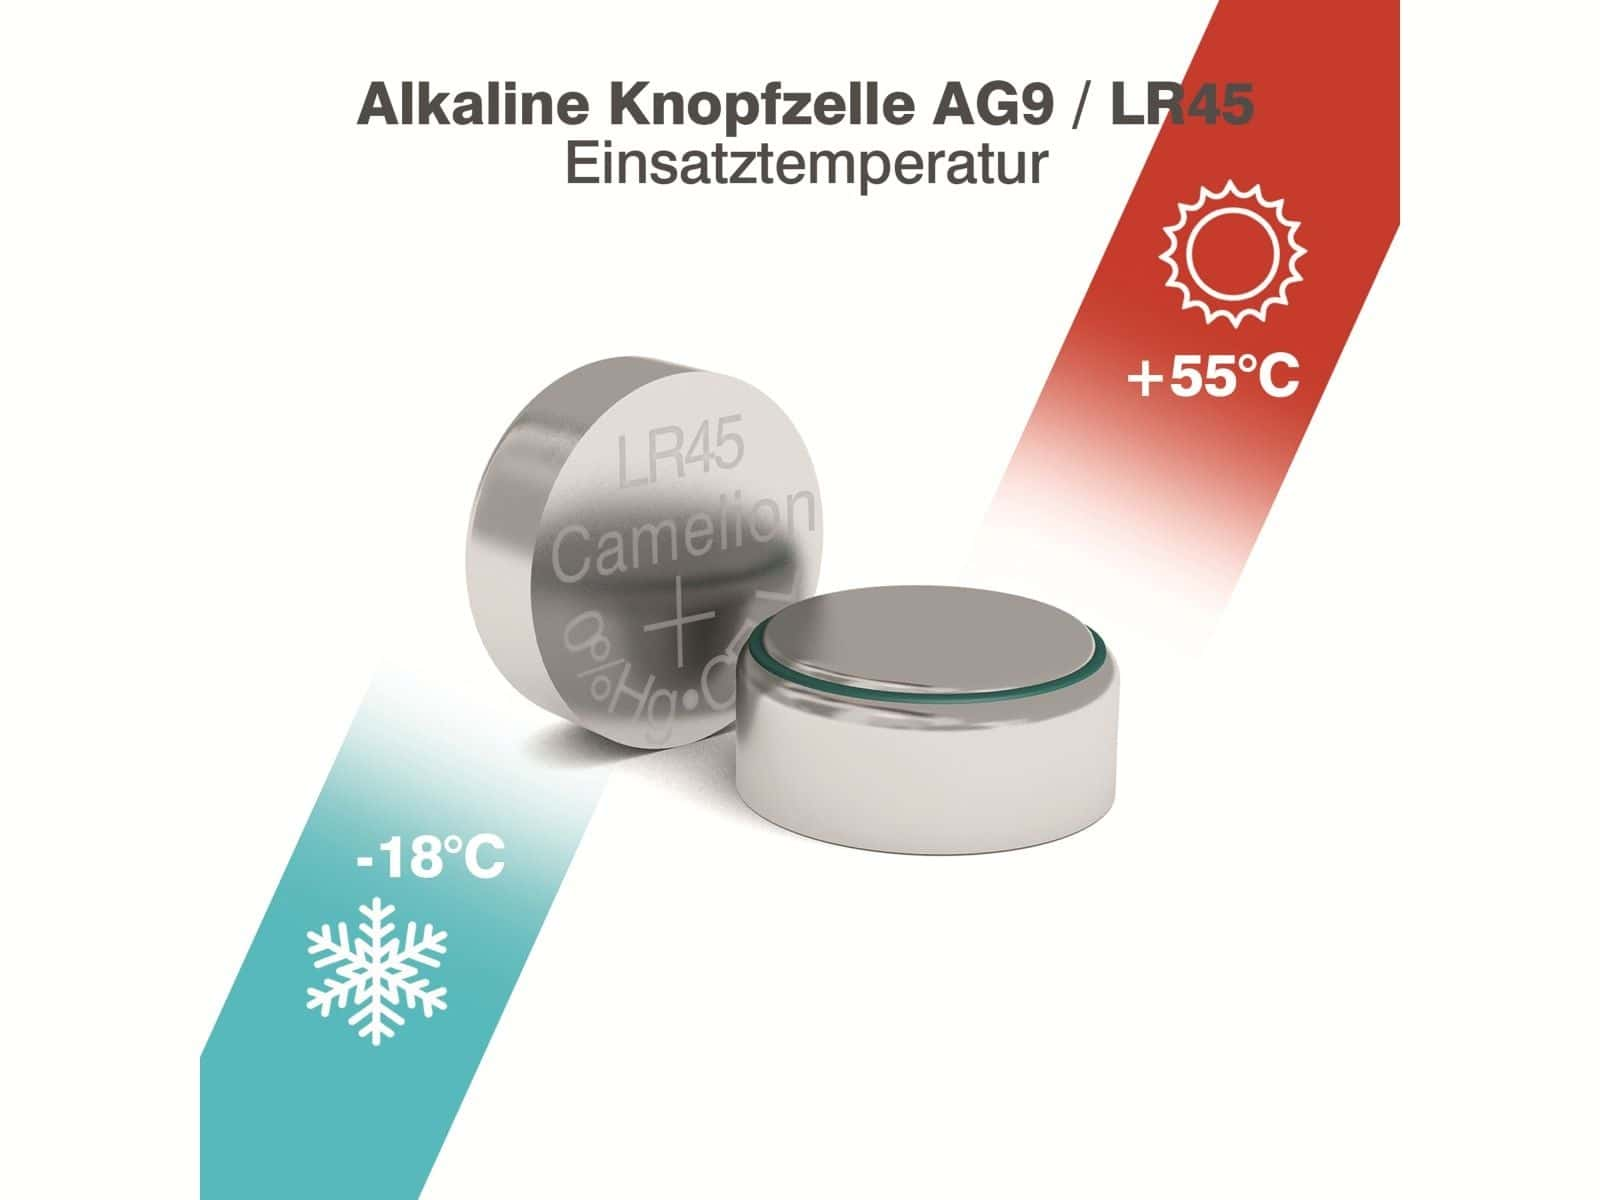 Alkaline 10 AG9, CAMELION Knopfzelle St. Knopfzelle